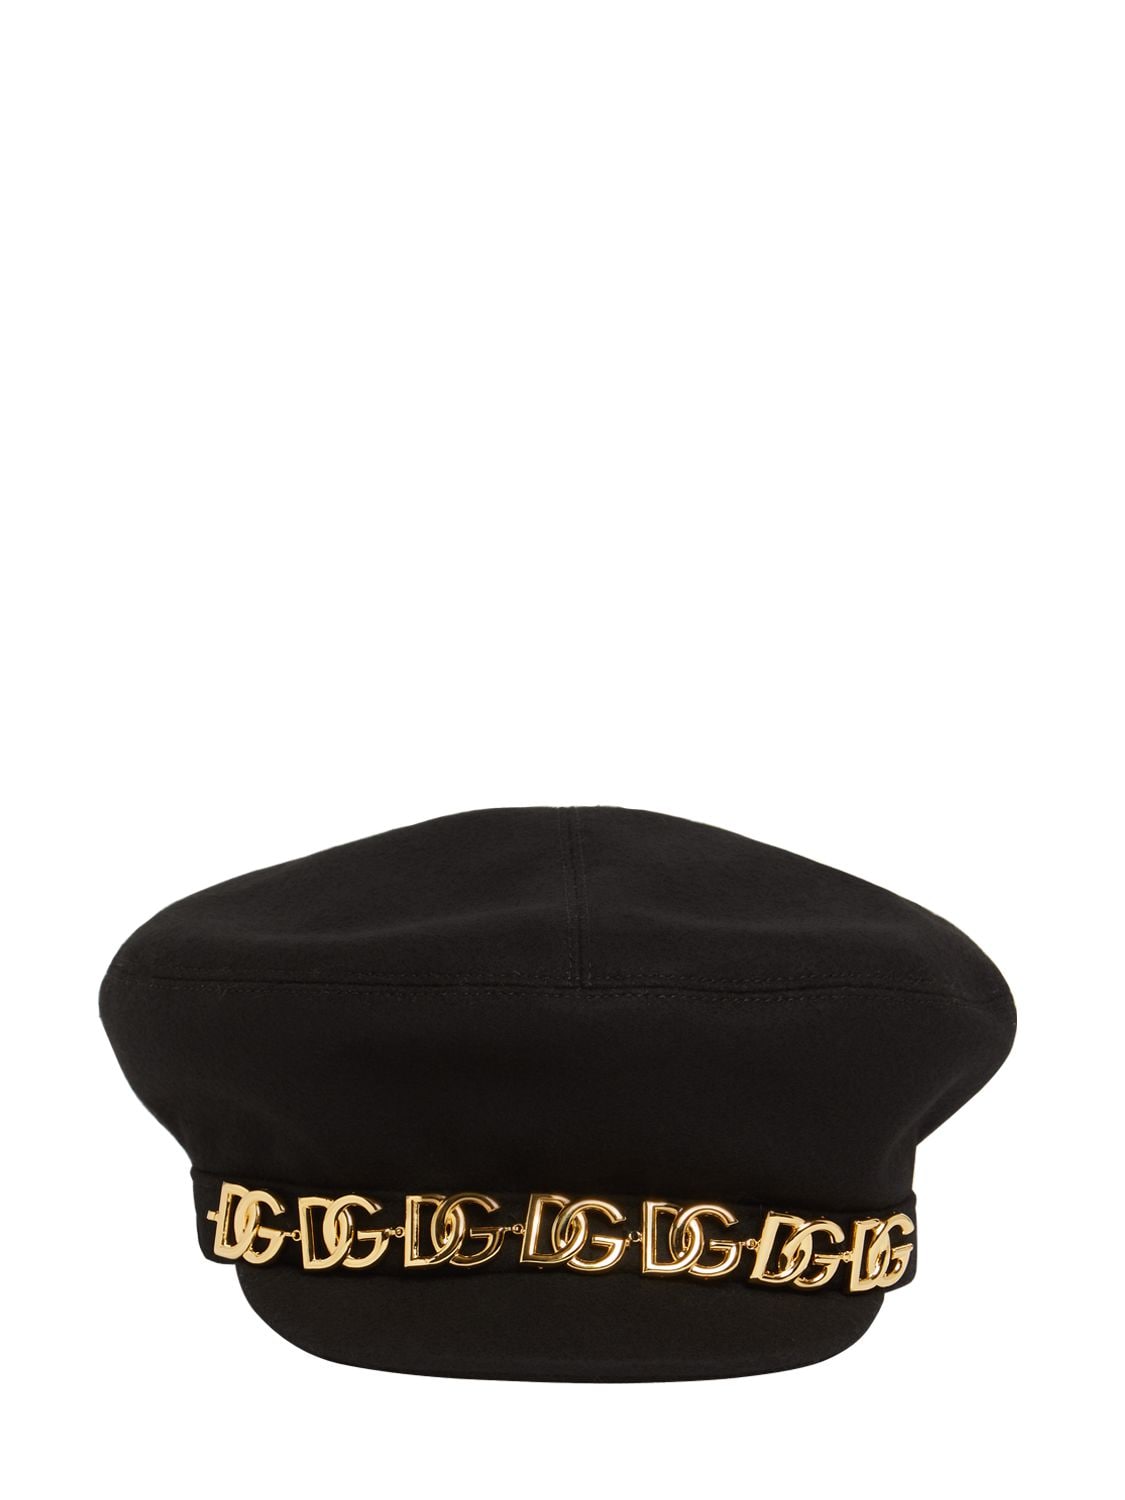 DOLCE & GABBANA 金属LOGO报童帽,74IG8X018-TJAWMDA1